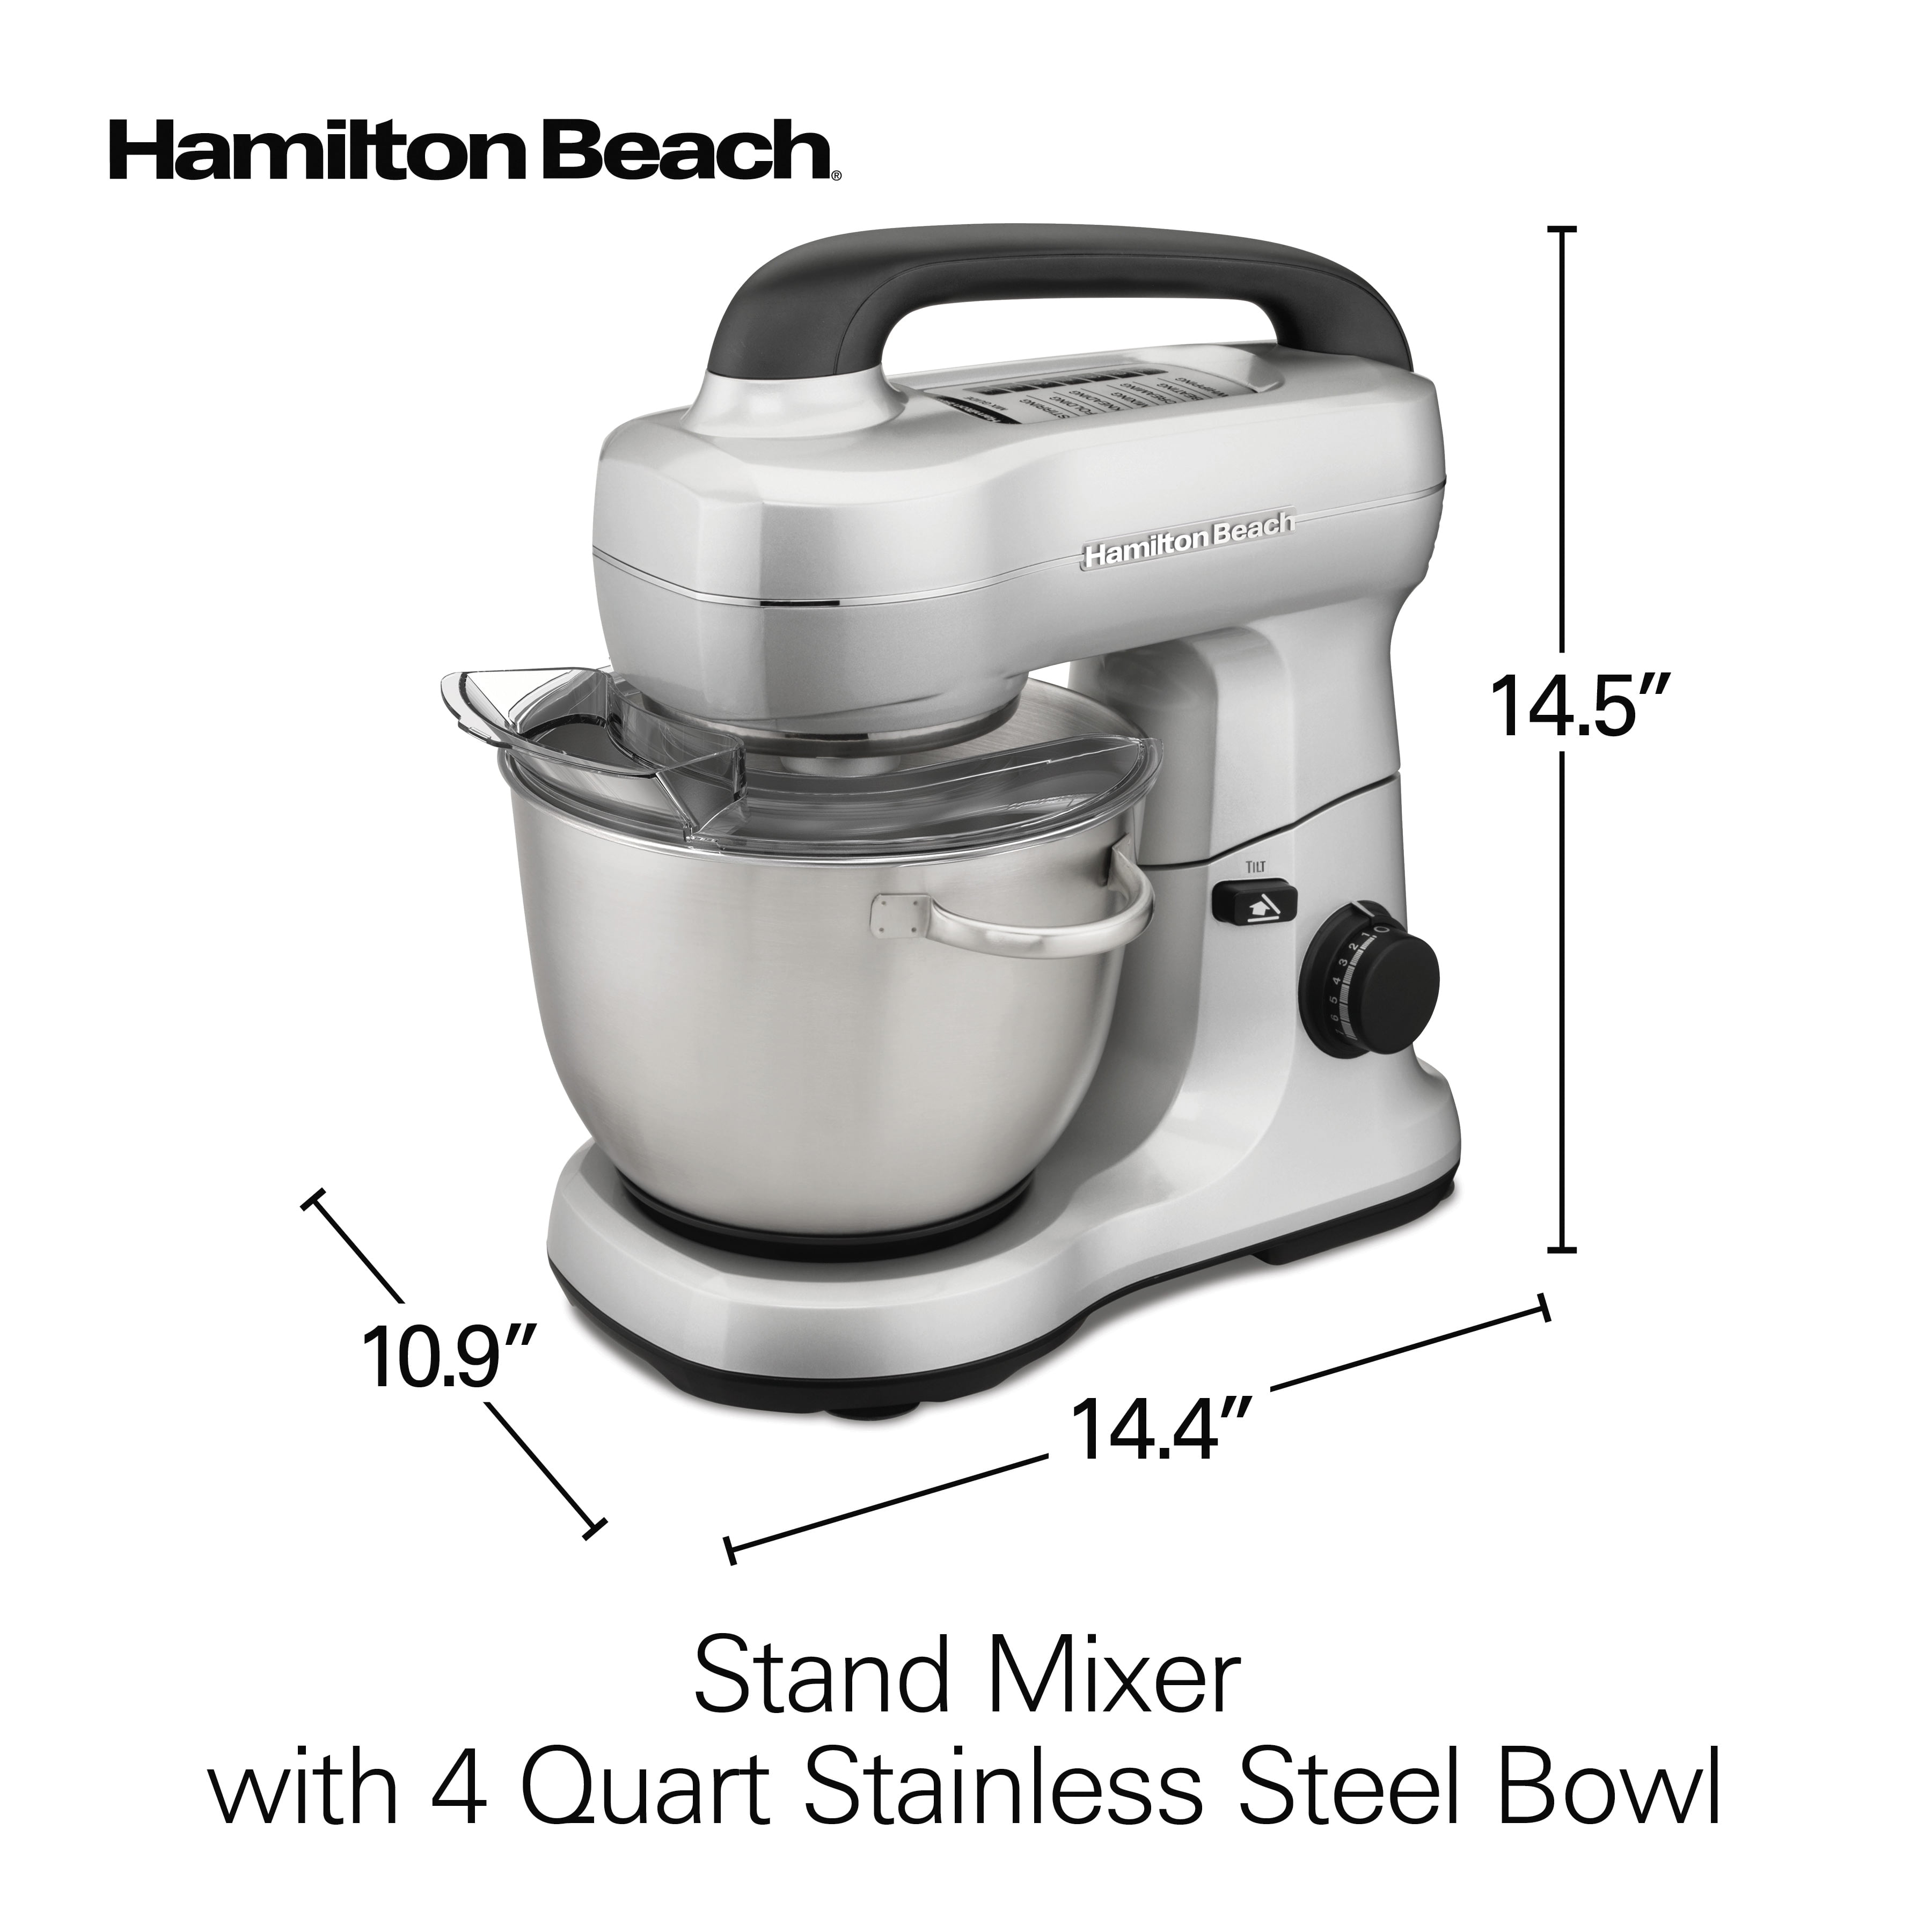 Hamilton Beach 6332 3.5-Quart Mixer - charcoal gray/stainless